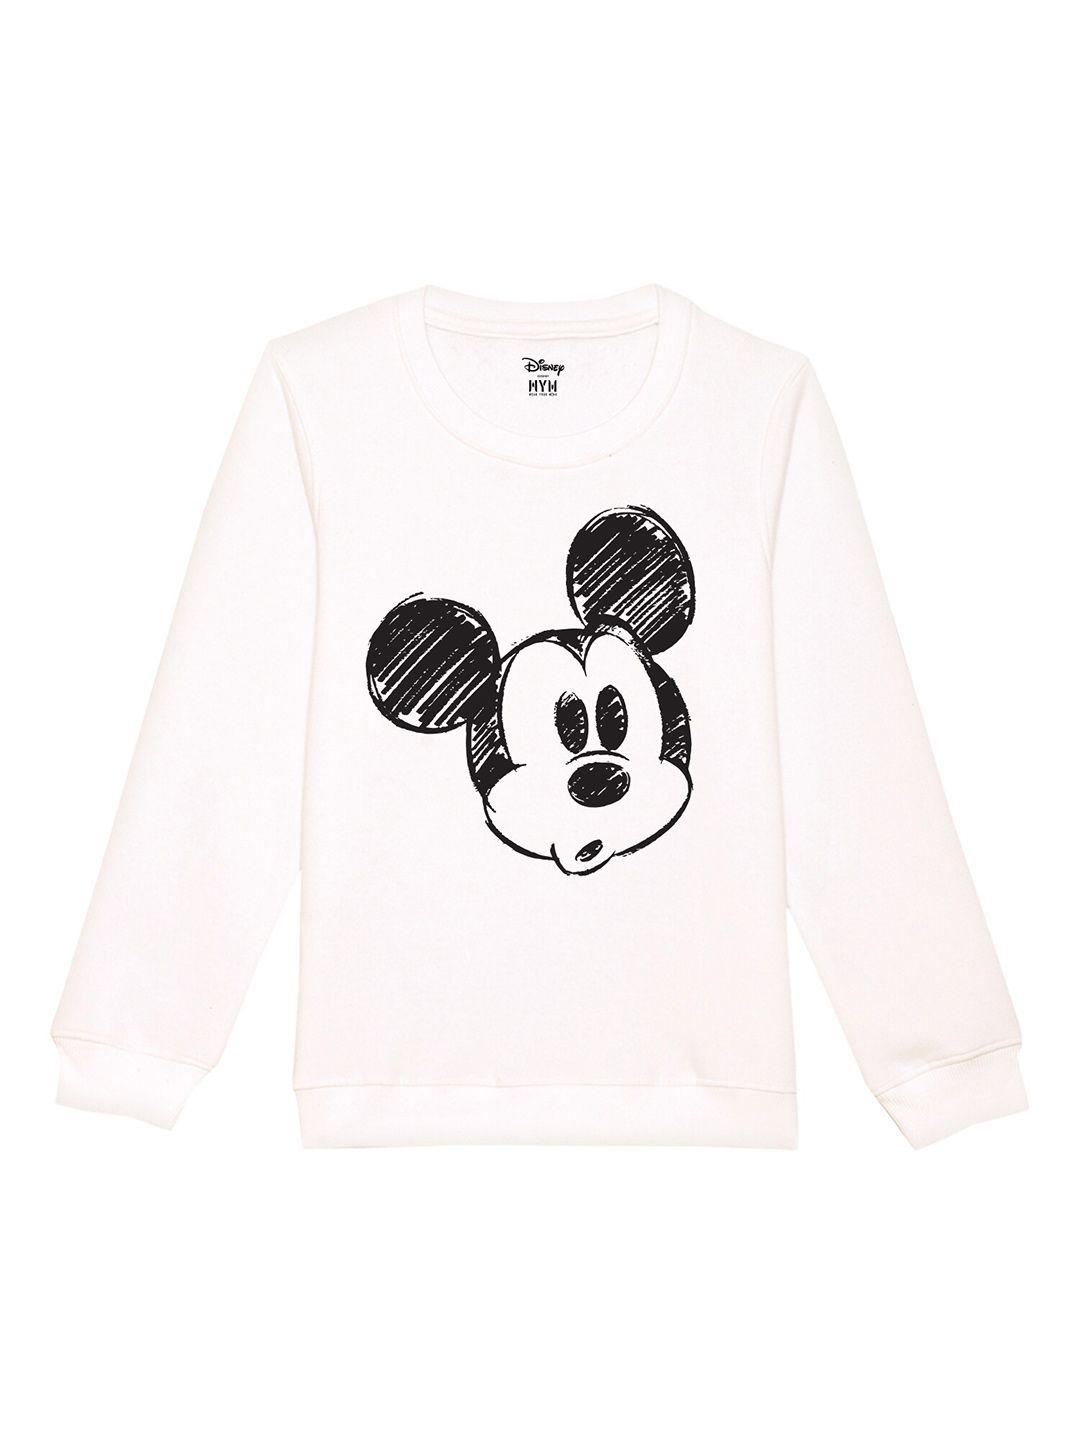 Disney by Wear Your Mind Boys White Printed Sweatshirt